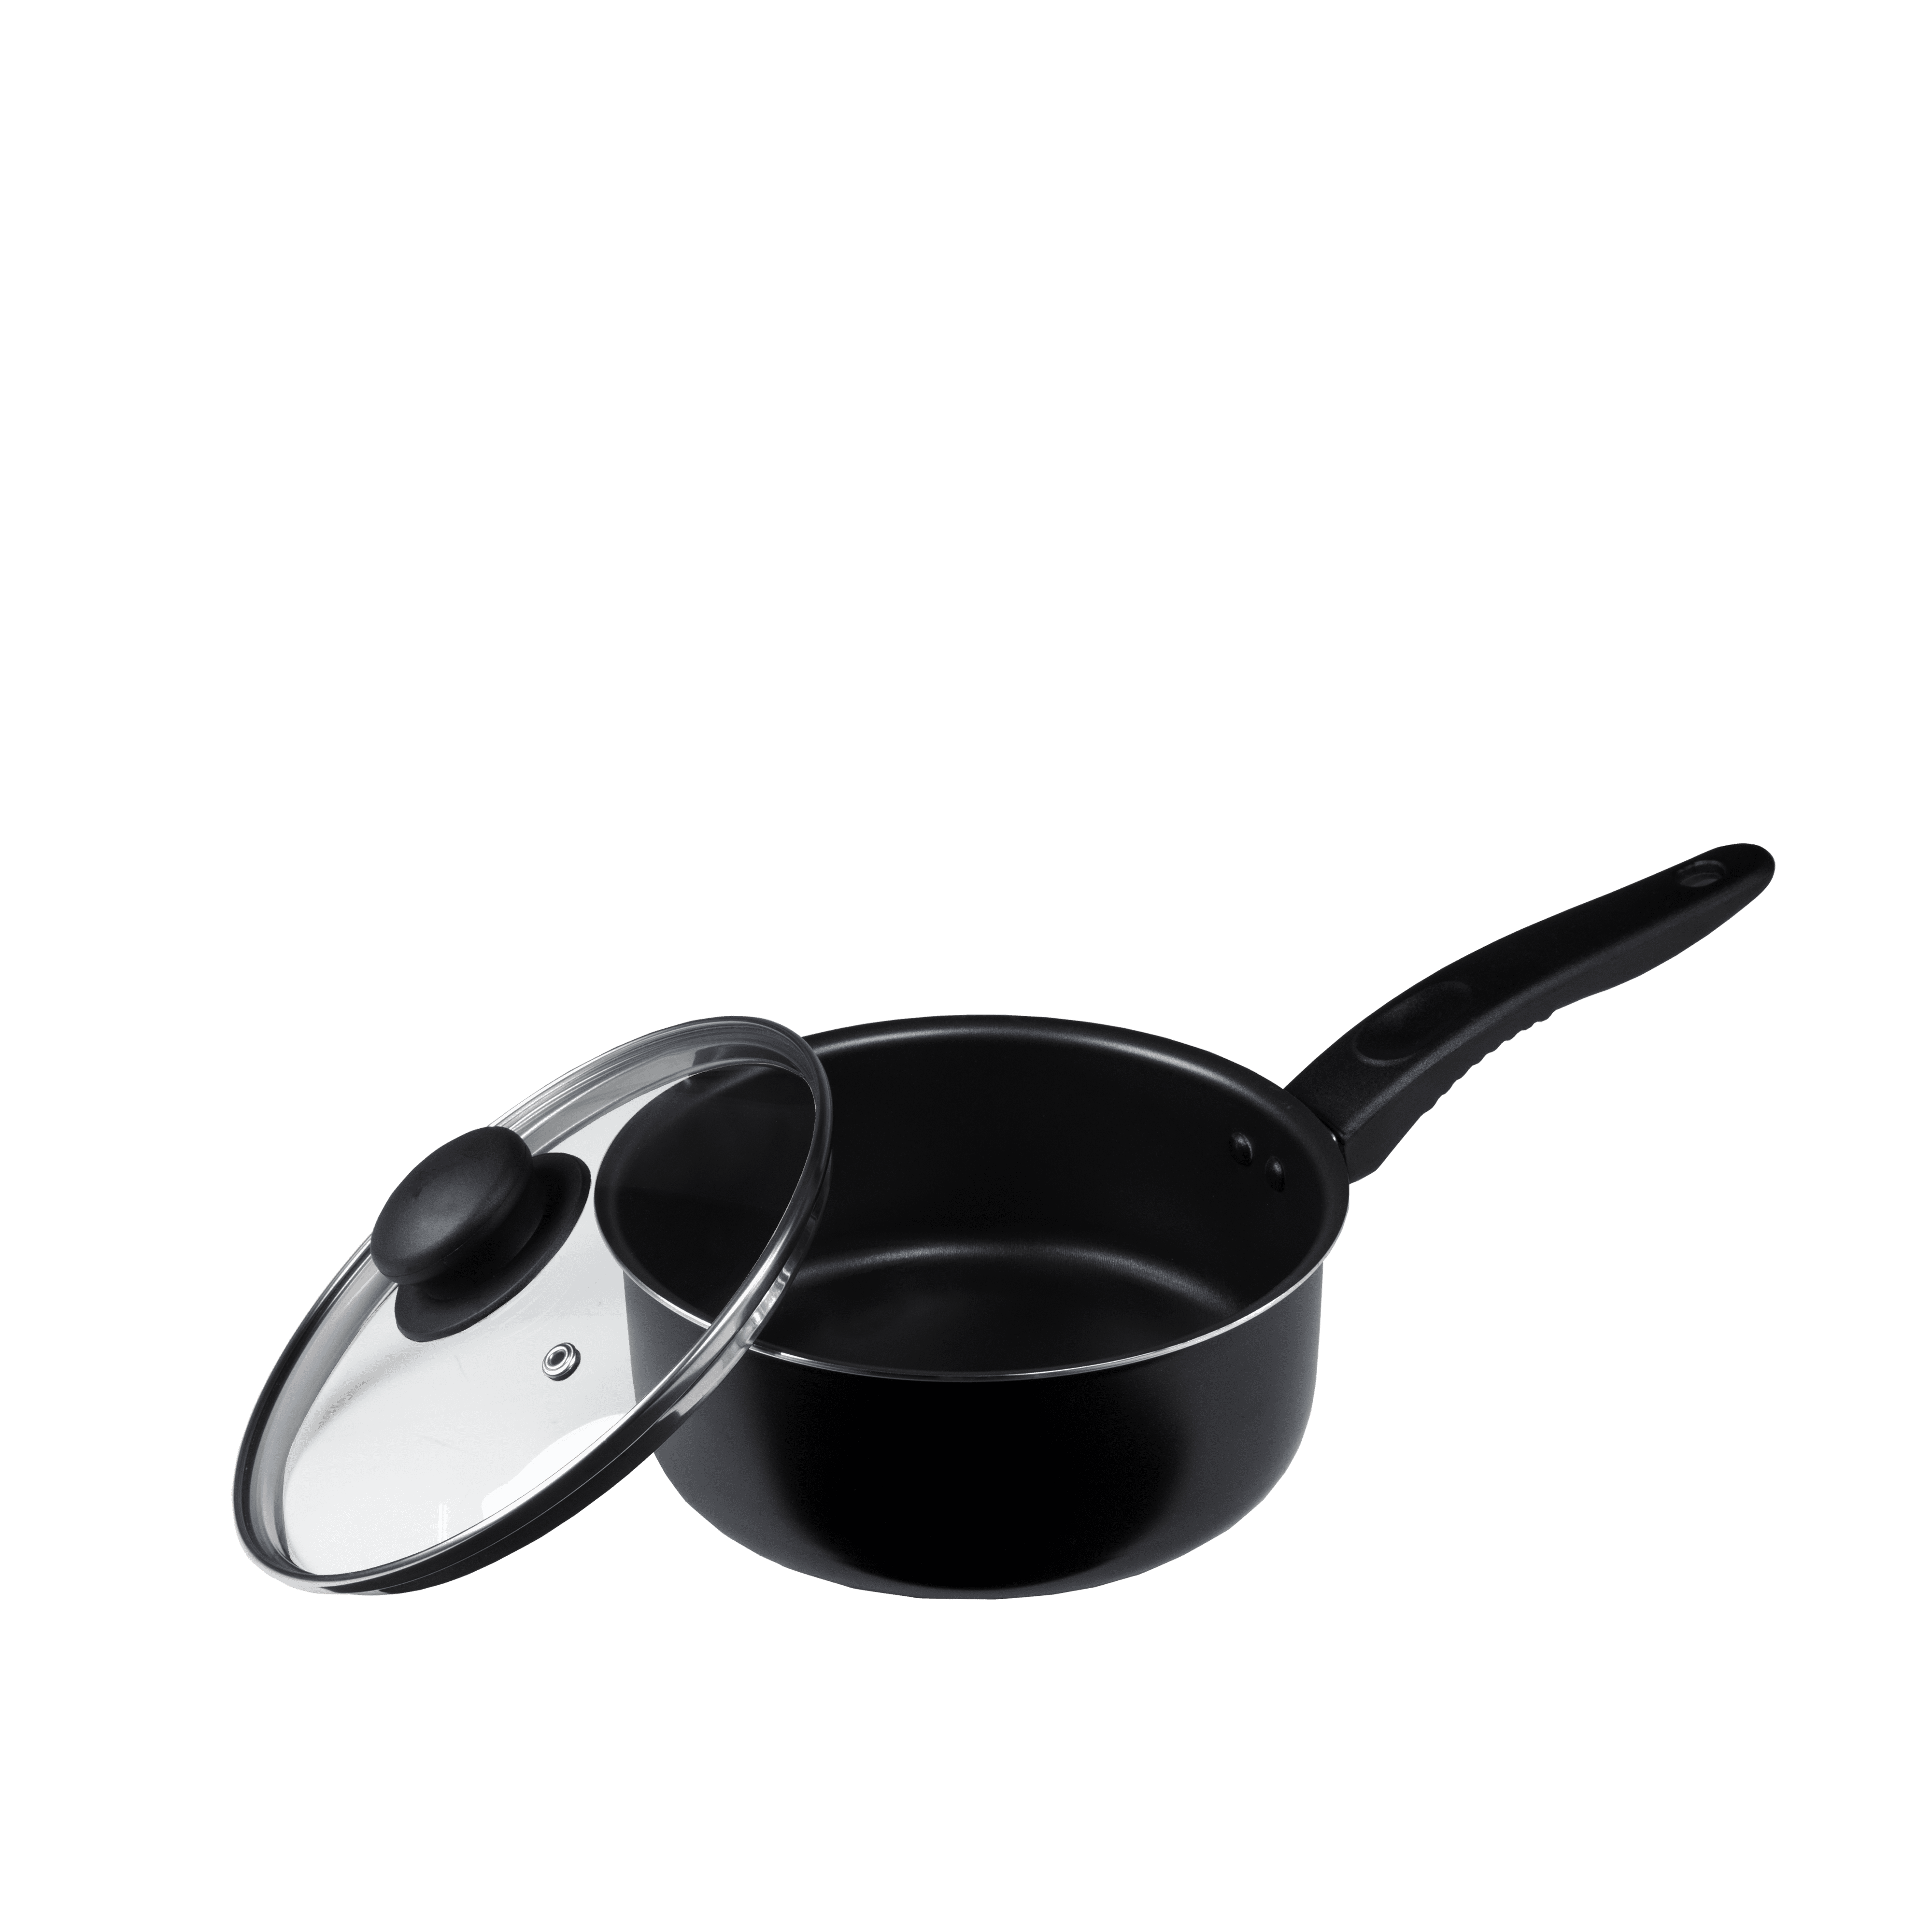 KOCH SYSTEME CS Nonstick Saucepan Set with Lid - 1.5 Quart & 3 Quart Stone  Derived Coating Sauce Pan with Pour Spouts, Milk Pan & Pot with Bakelite